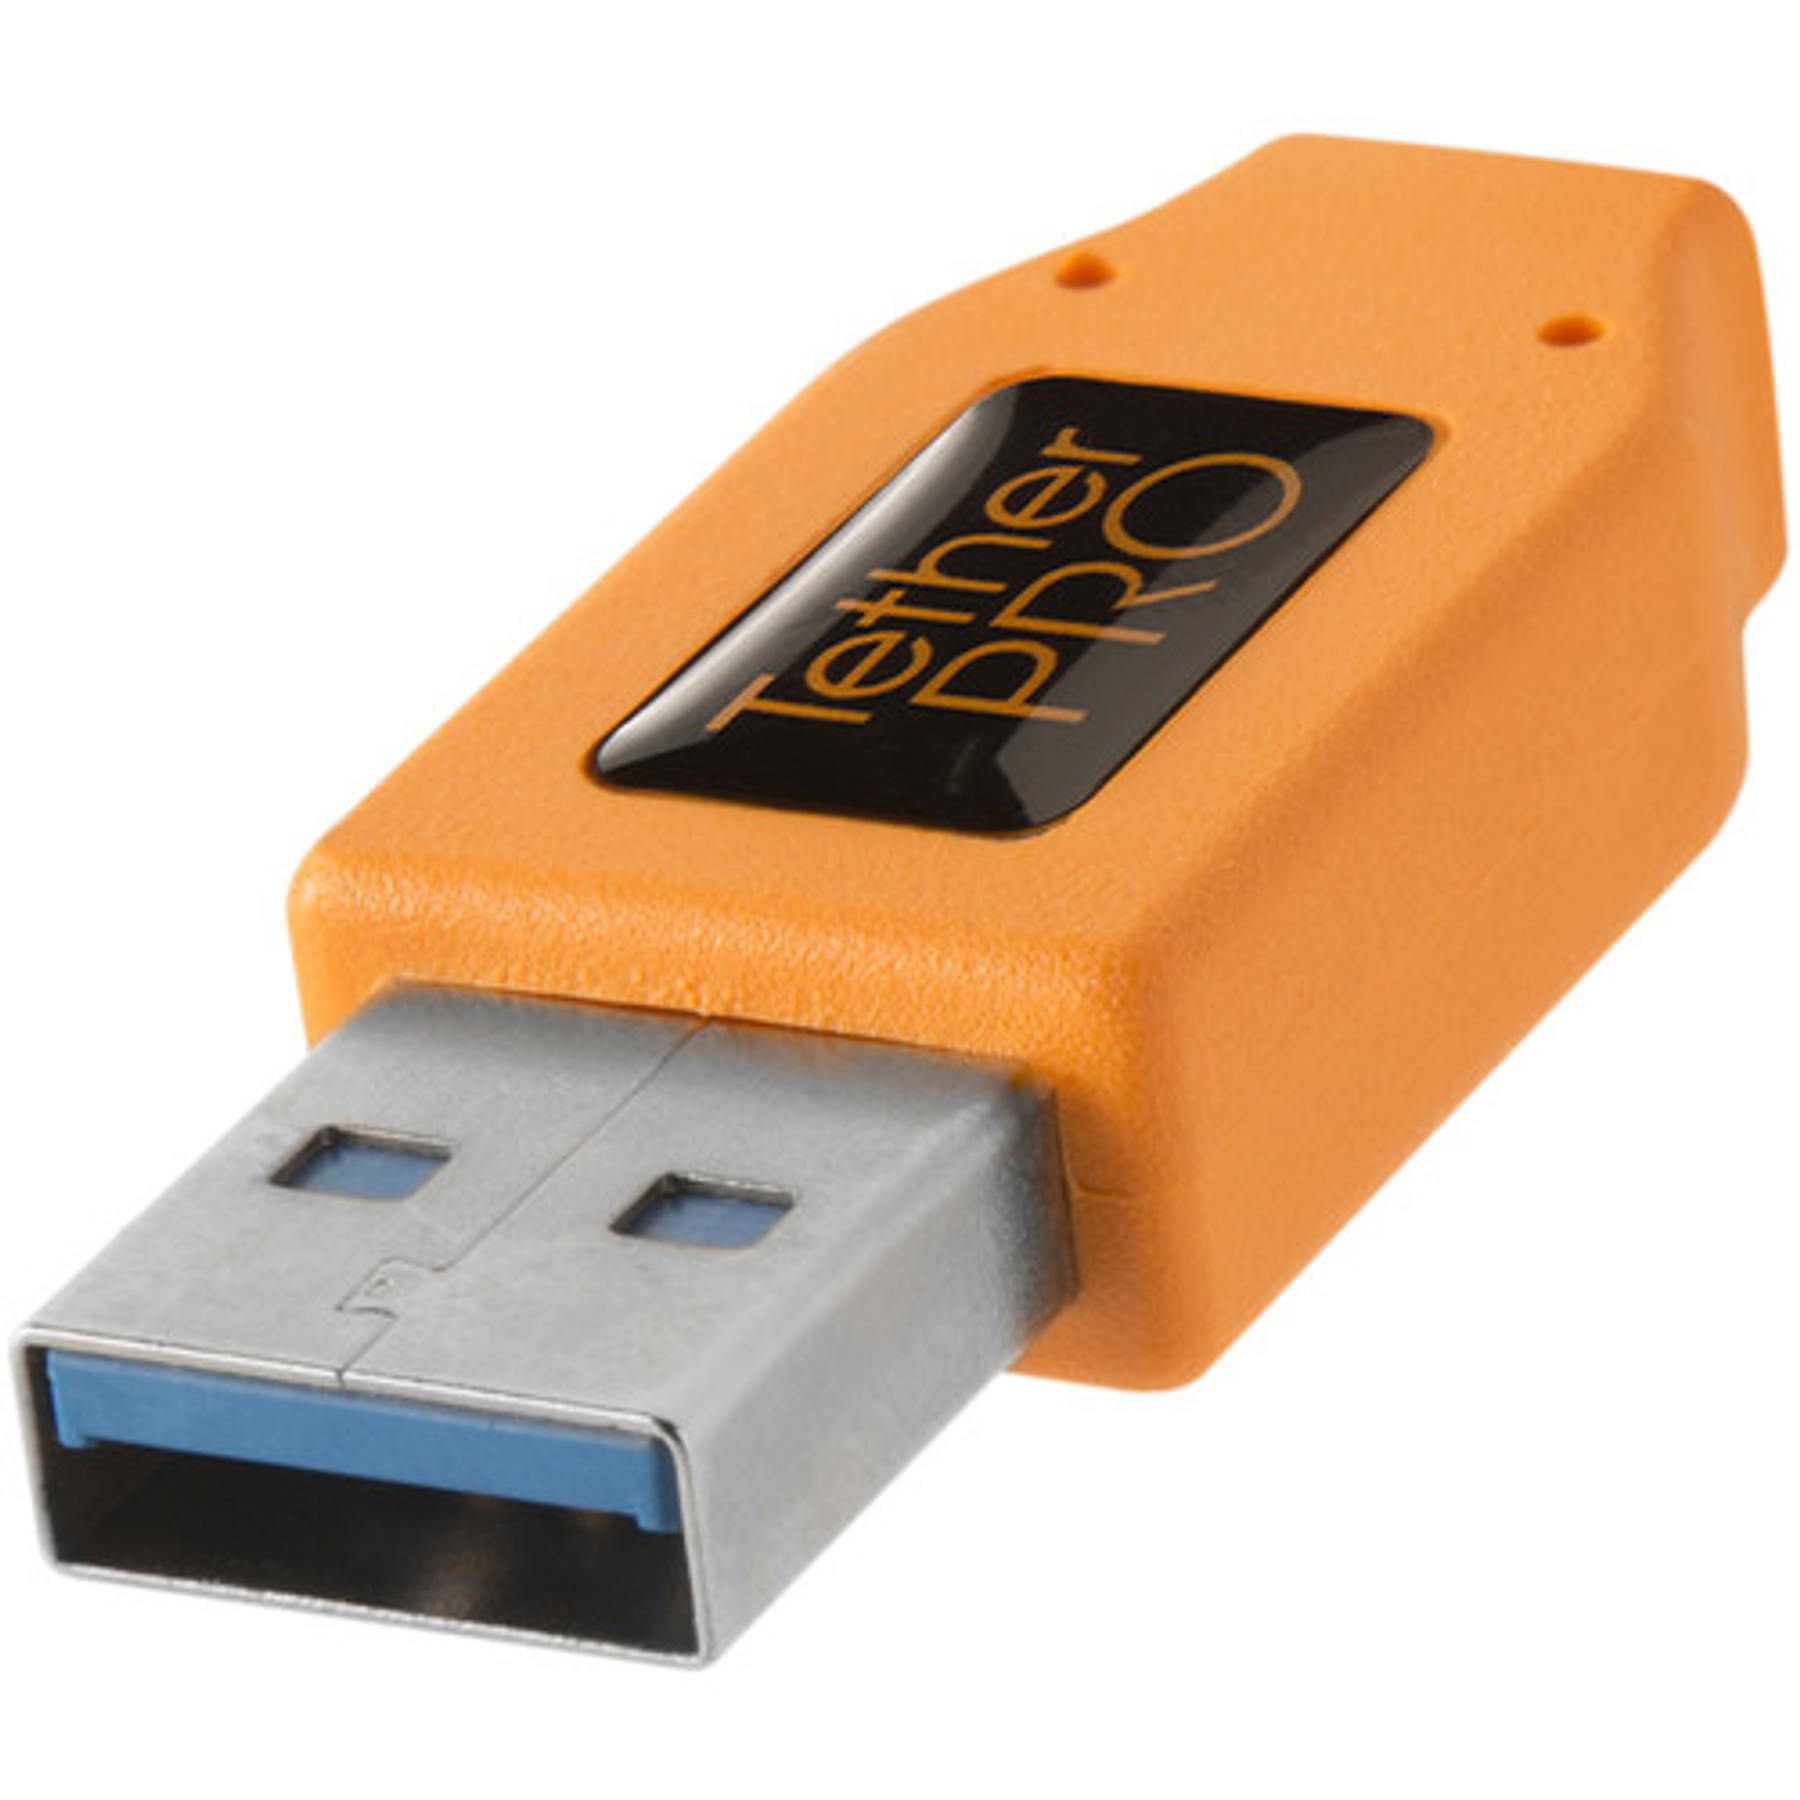 Tether Tools TetherPro USB Tipo-C Macho a USB 3.0 Tipo A Cable Macho 